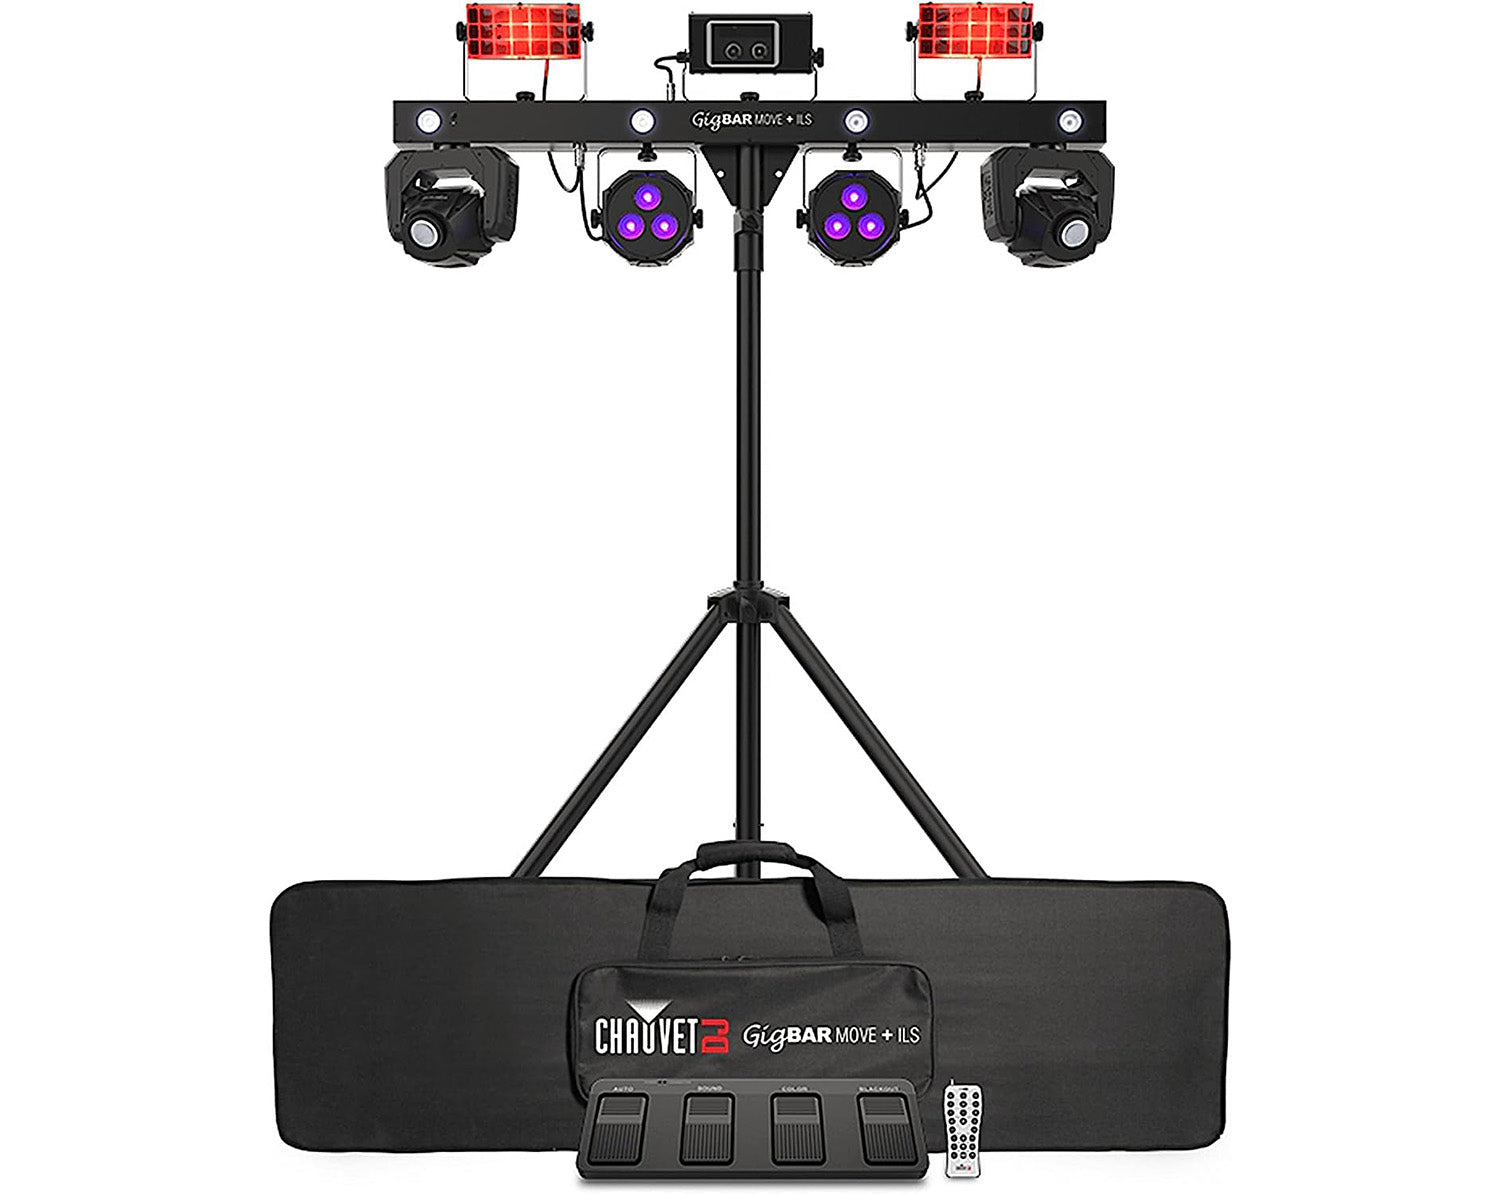 B-Stock: Chauvet DJ GigBAR MOVE + ILS, All in 1 Easy Lighting System by Chauvet DJ